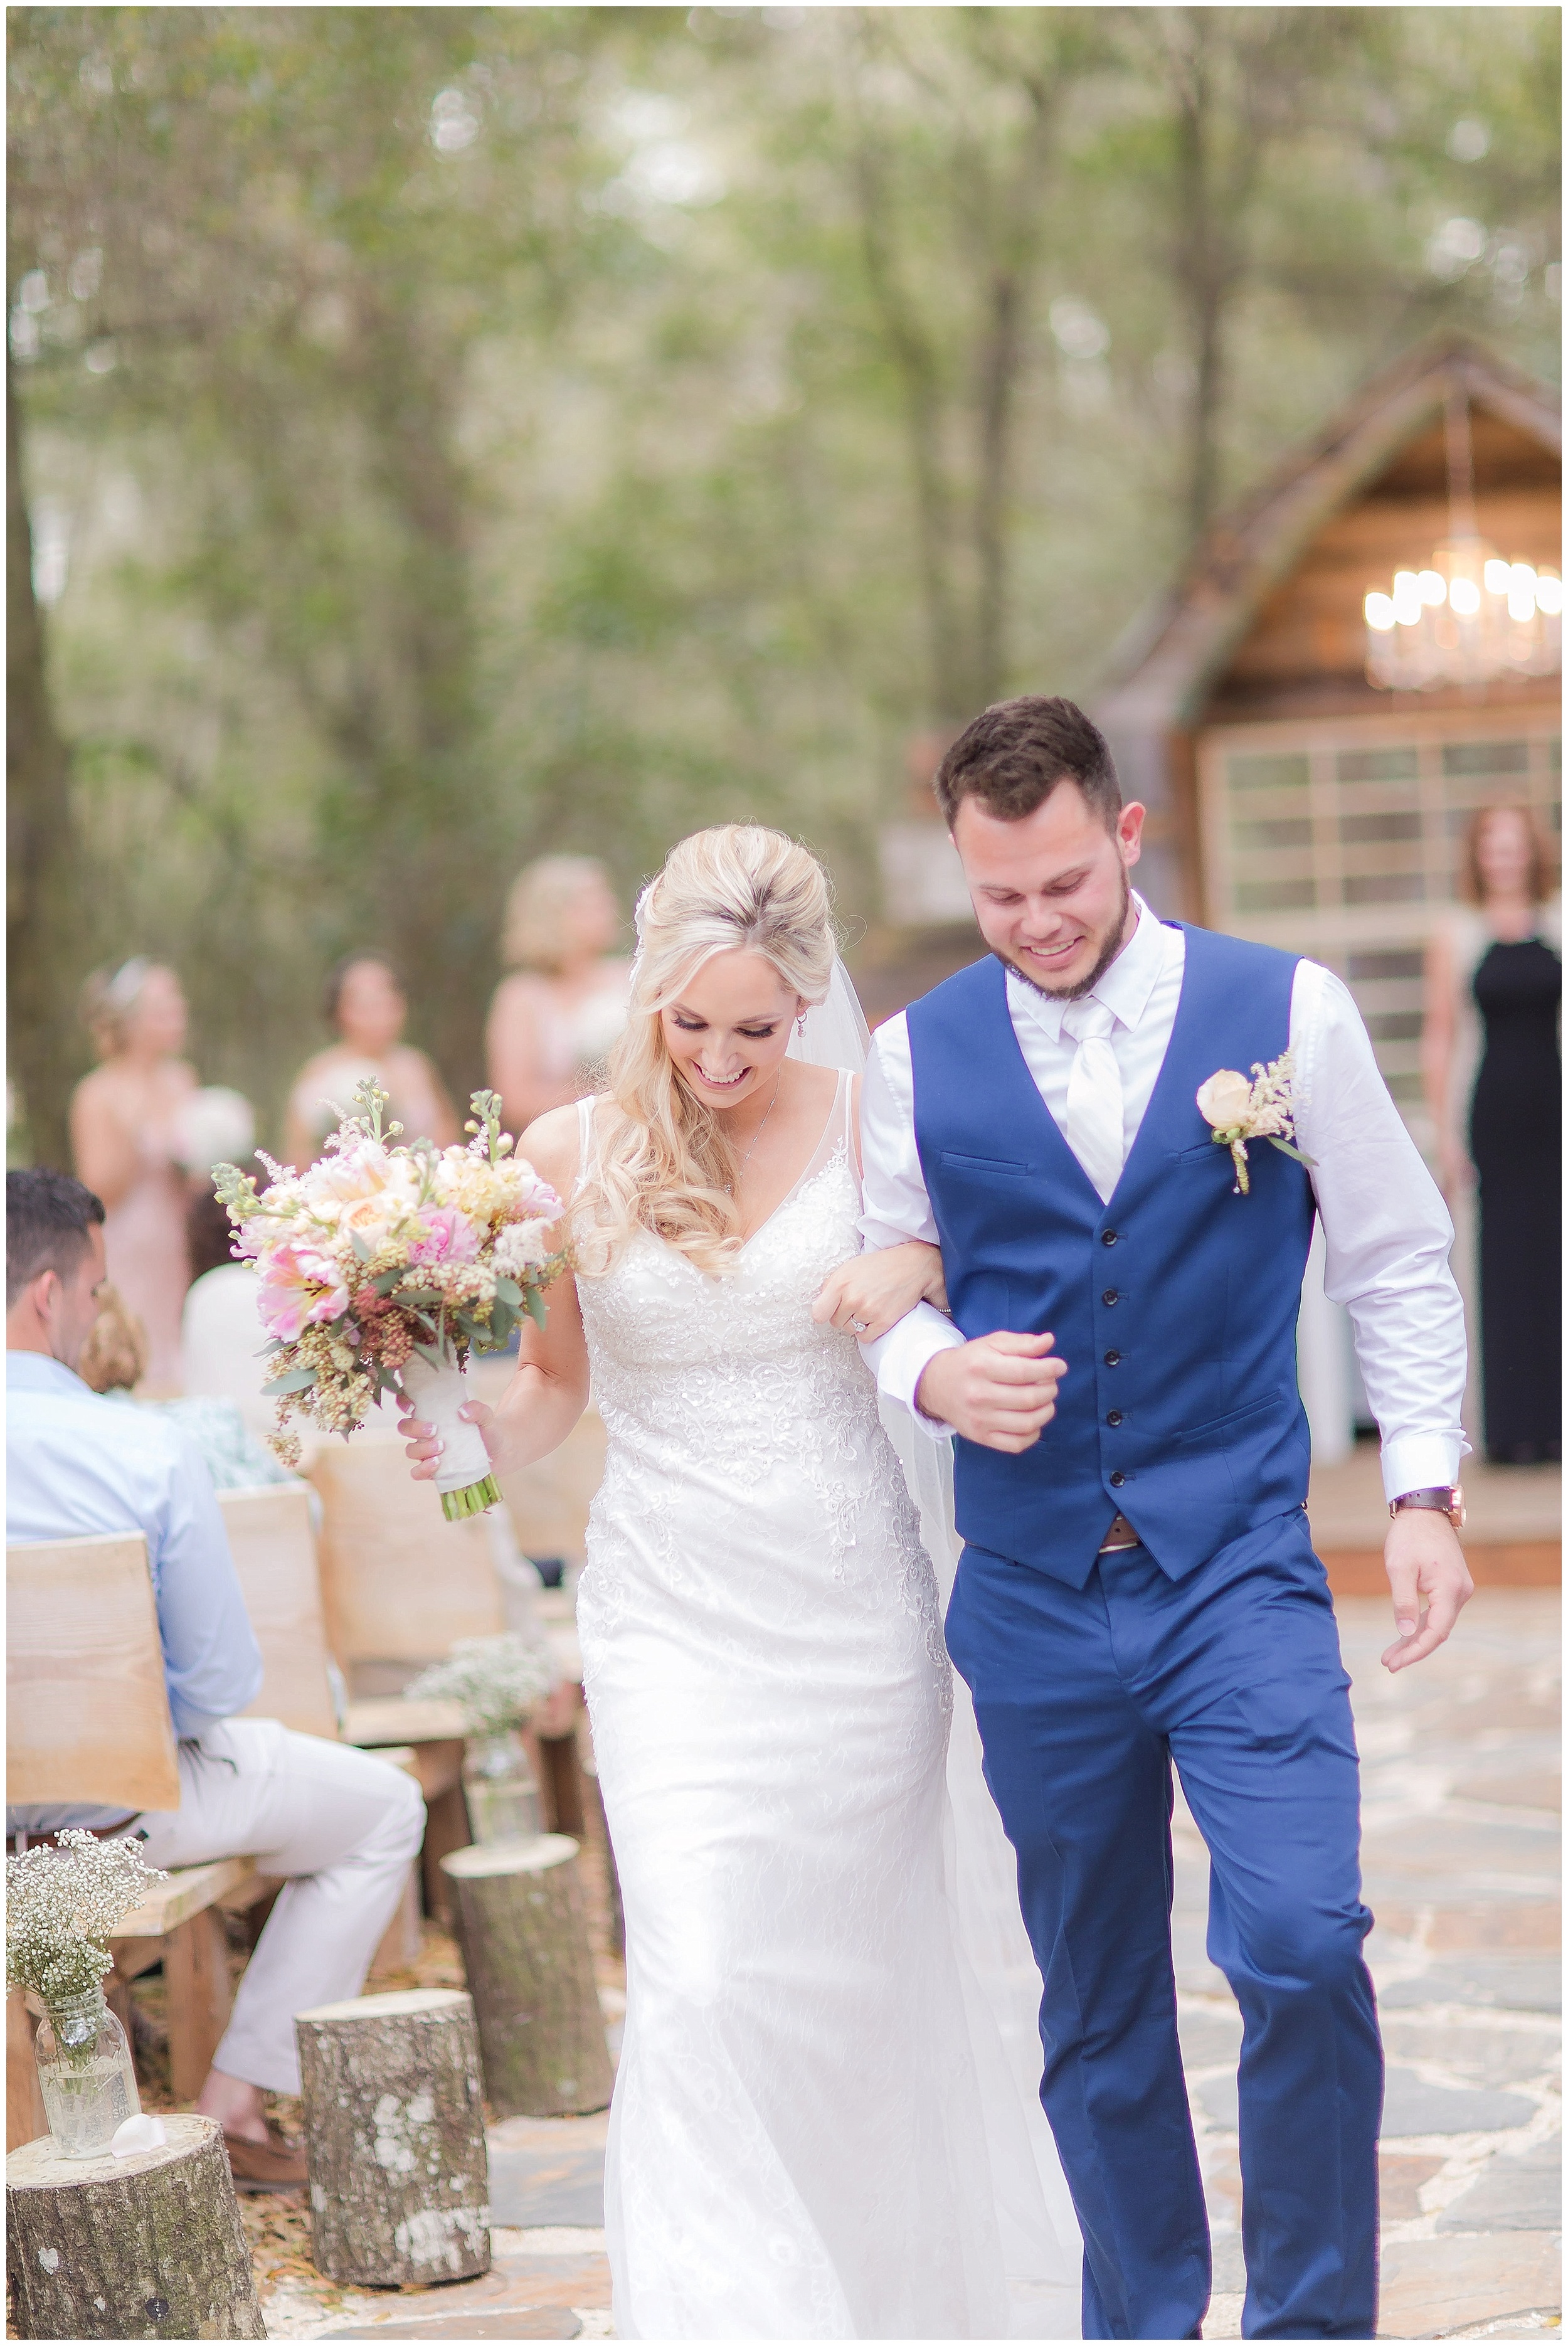 Just Married, Rustic Lace Dress and Blue Suit Vest 